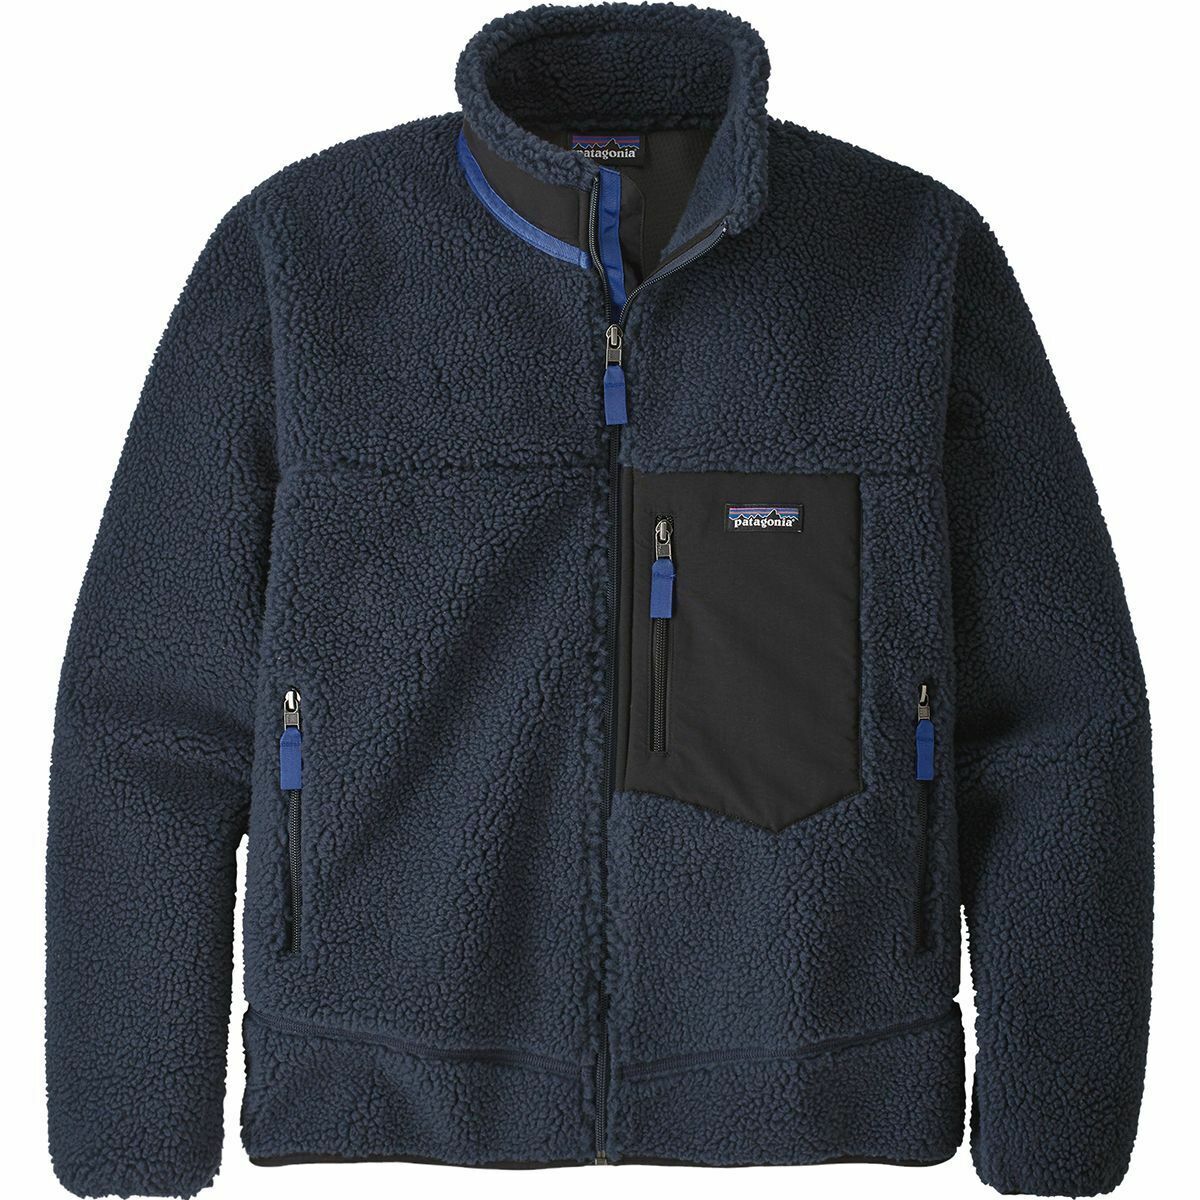 SALE Patagonia Classic Retro-X Fleece Jacket Men